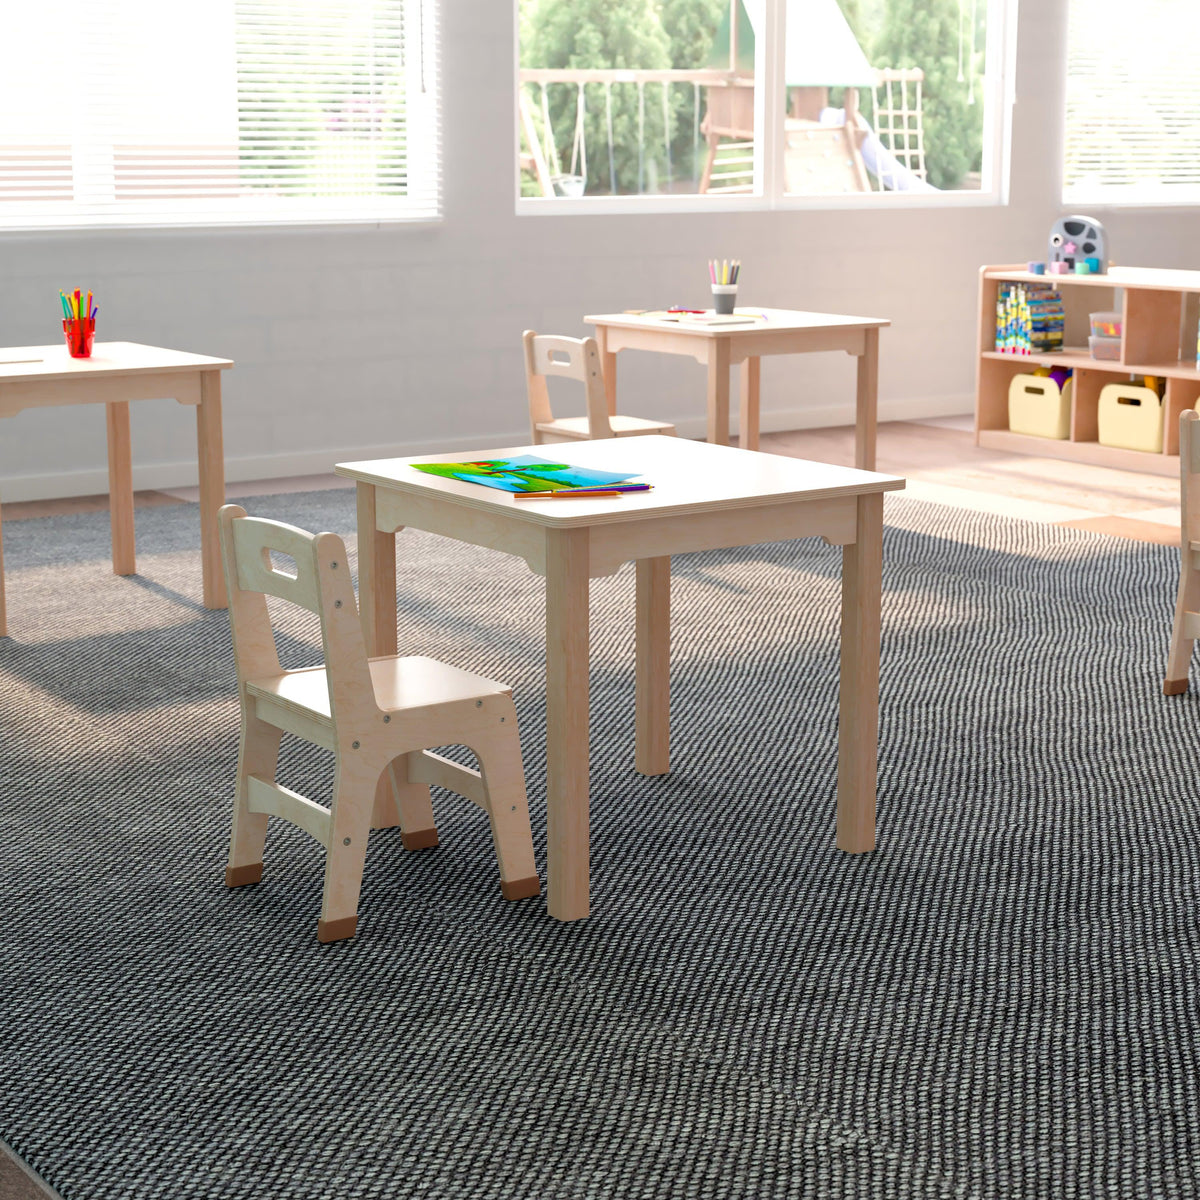 Commercial Grade 23.5inch Square Wooden Preschool Classroom Activity Table - Beech